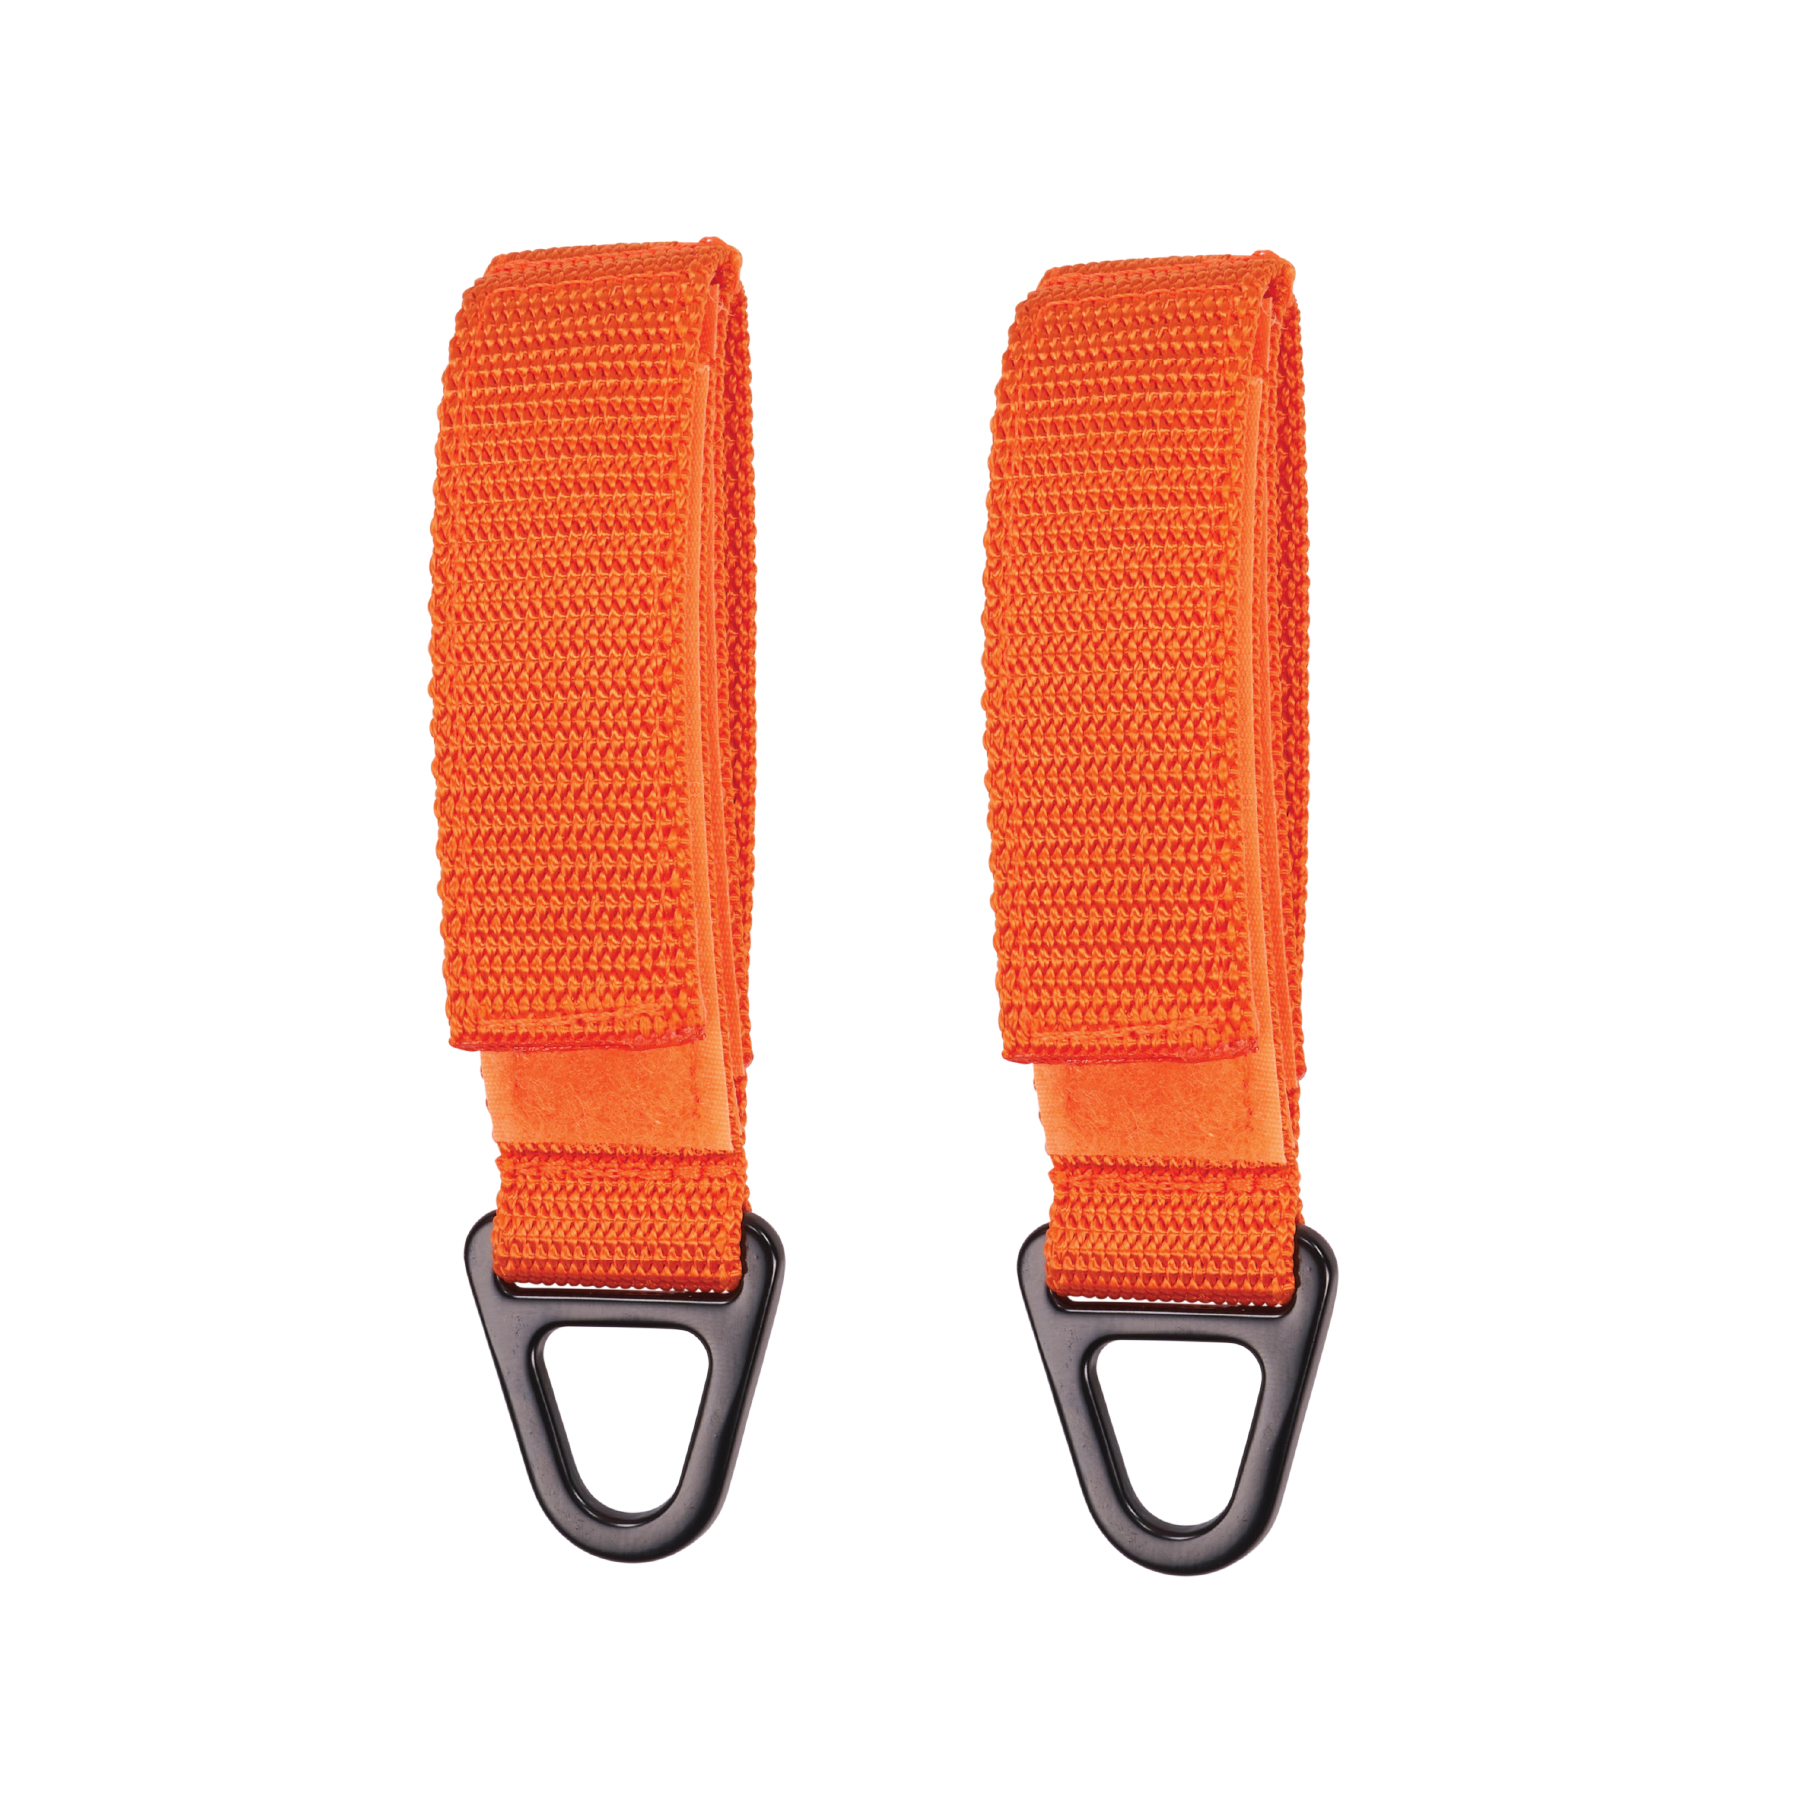 https://www.ergodyne.com/sites/default/files/product-images/3172-anchor-strap-hook-and-loop-closure-for-tool-tethering-orange-pair.jpg